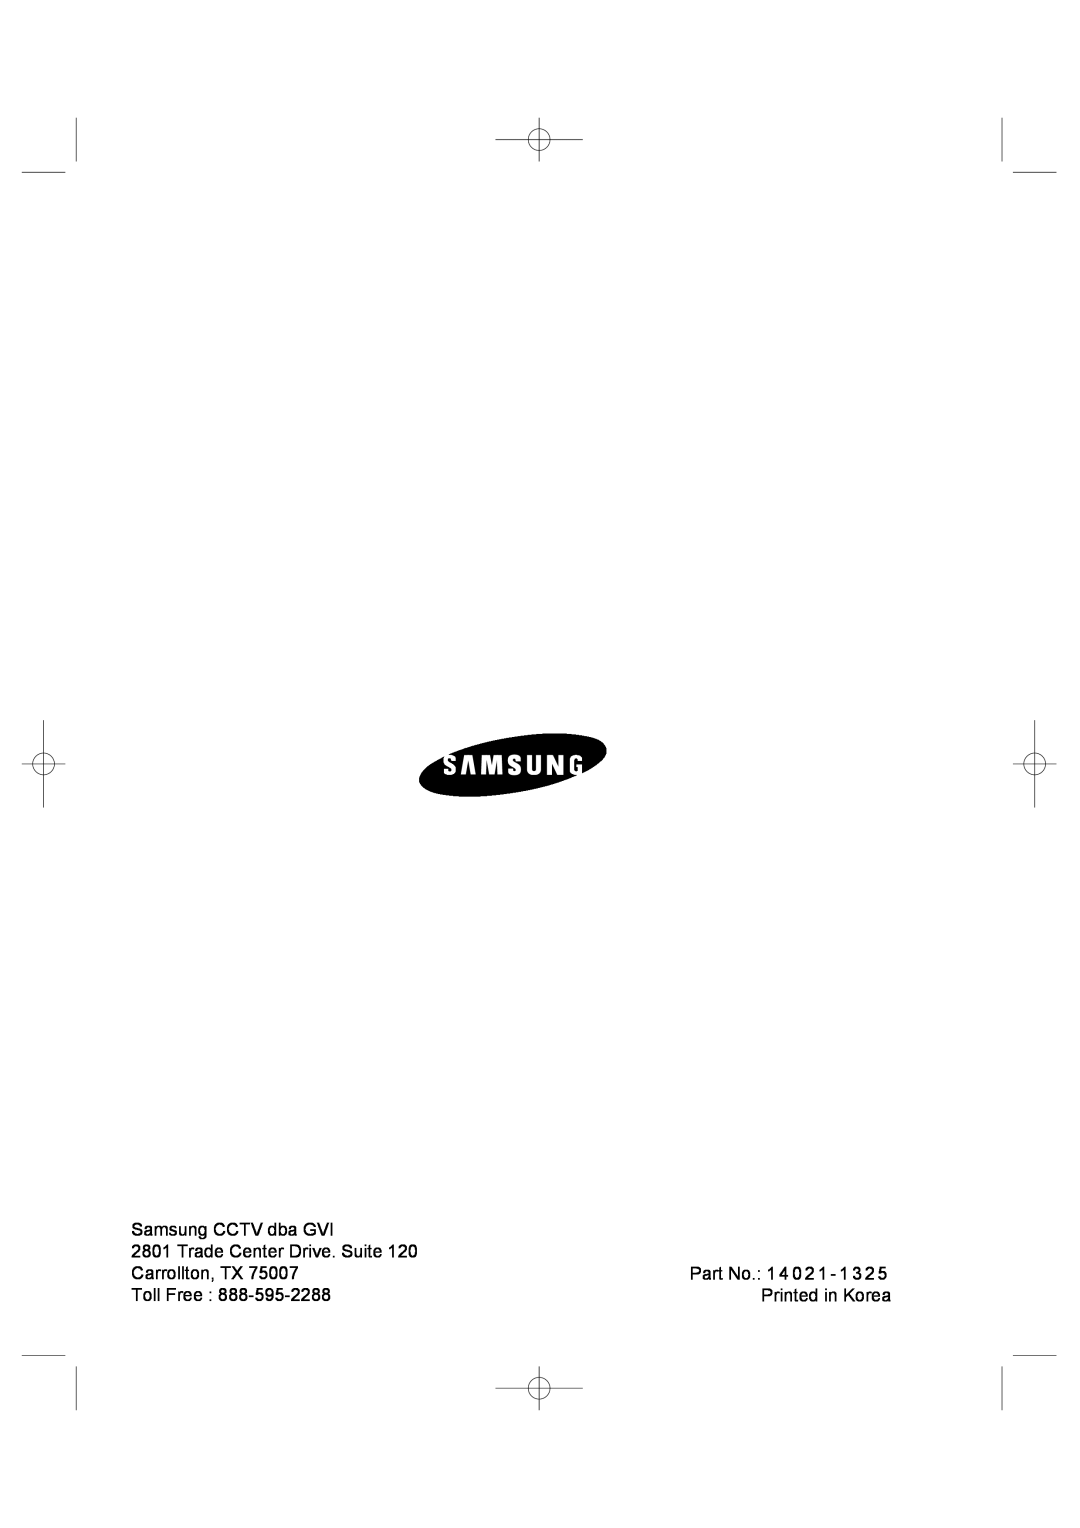 Samsung SSC17WEB manual Samsung CCTV dba GVI, Trade Center Drive. Suite, Carrollton, TX, Toll Free, Part No. 1 4 0 2 1 - 1 